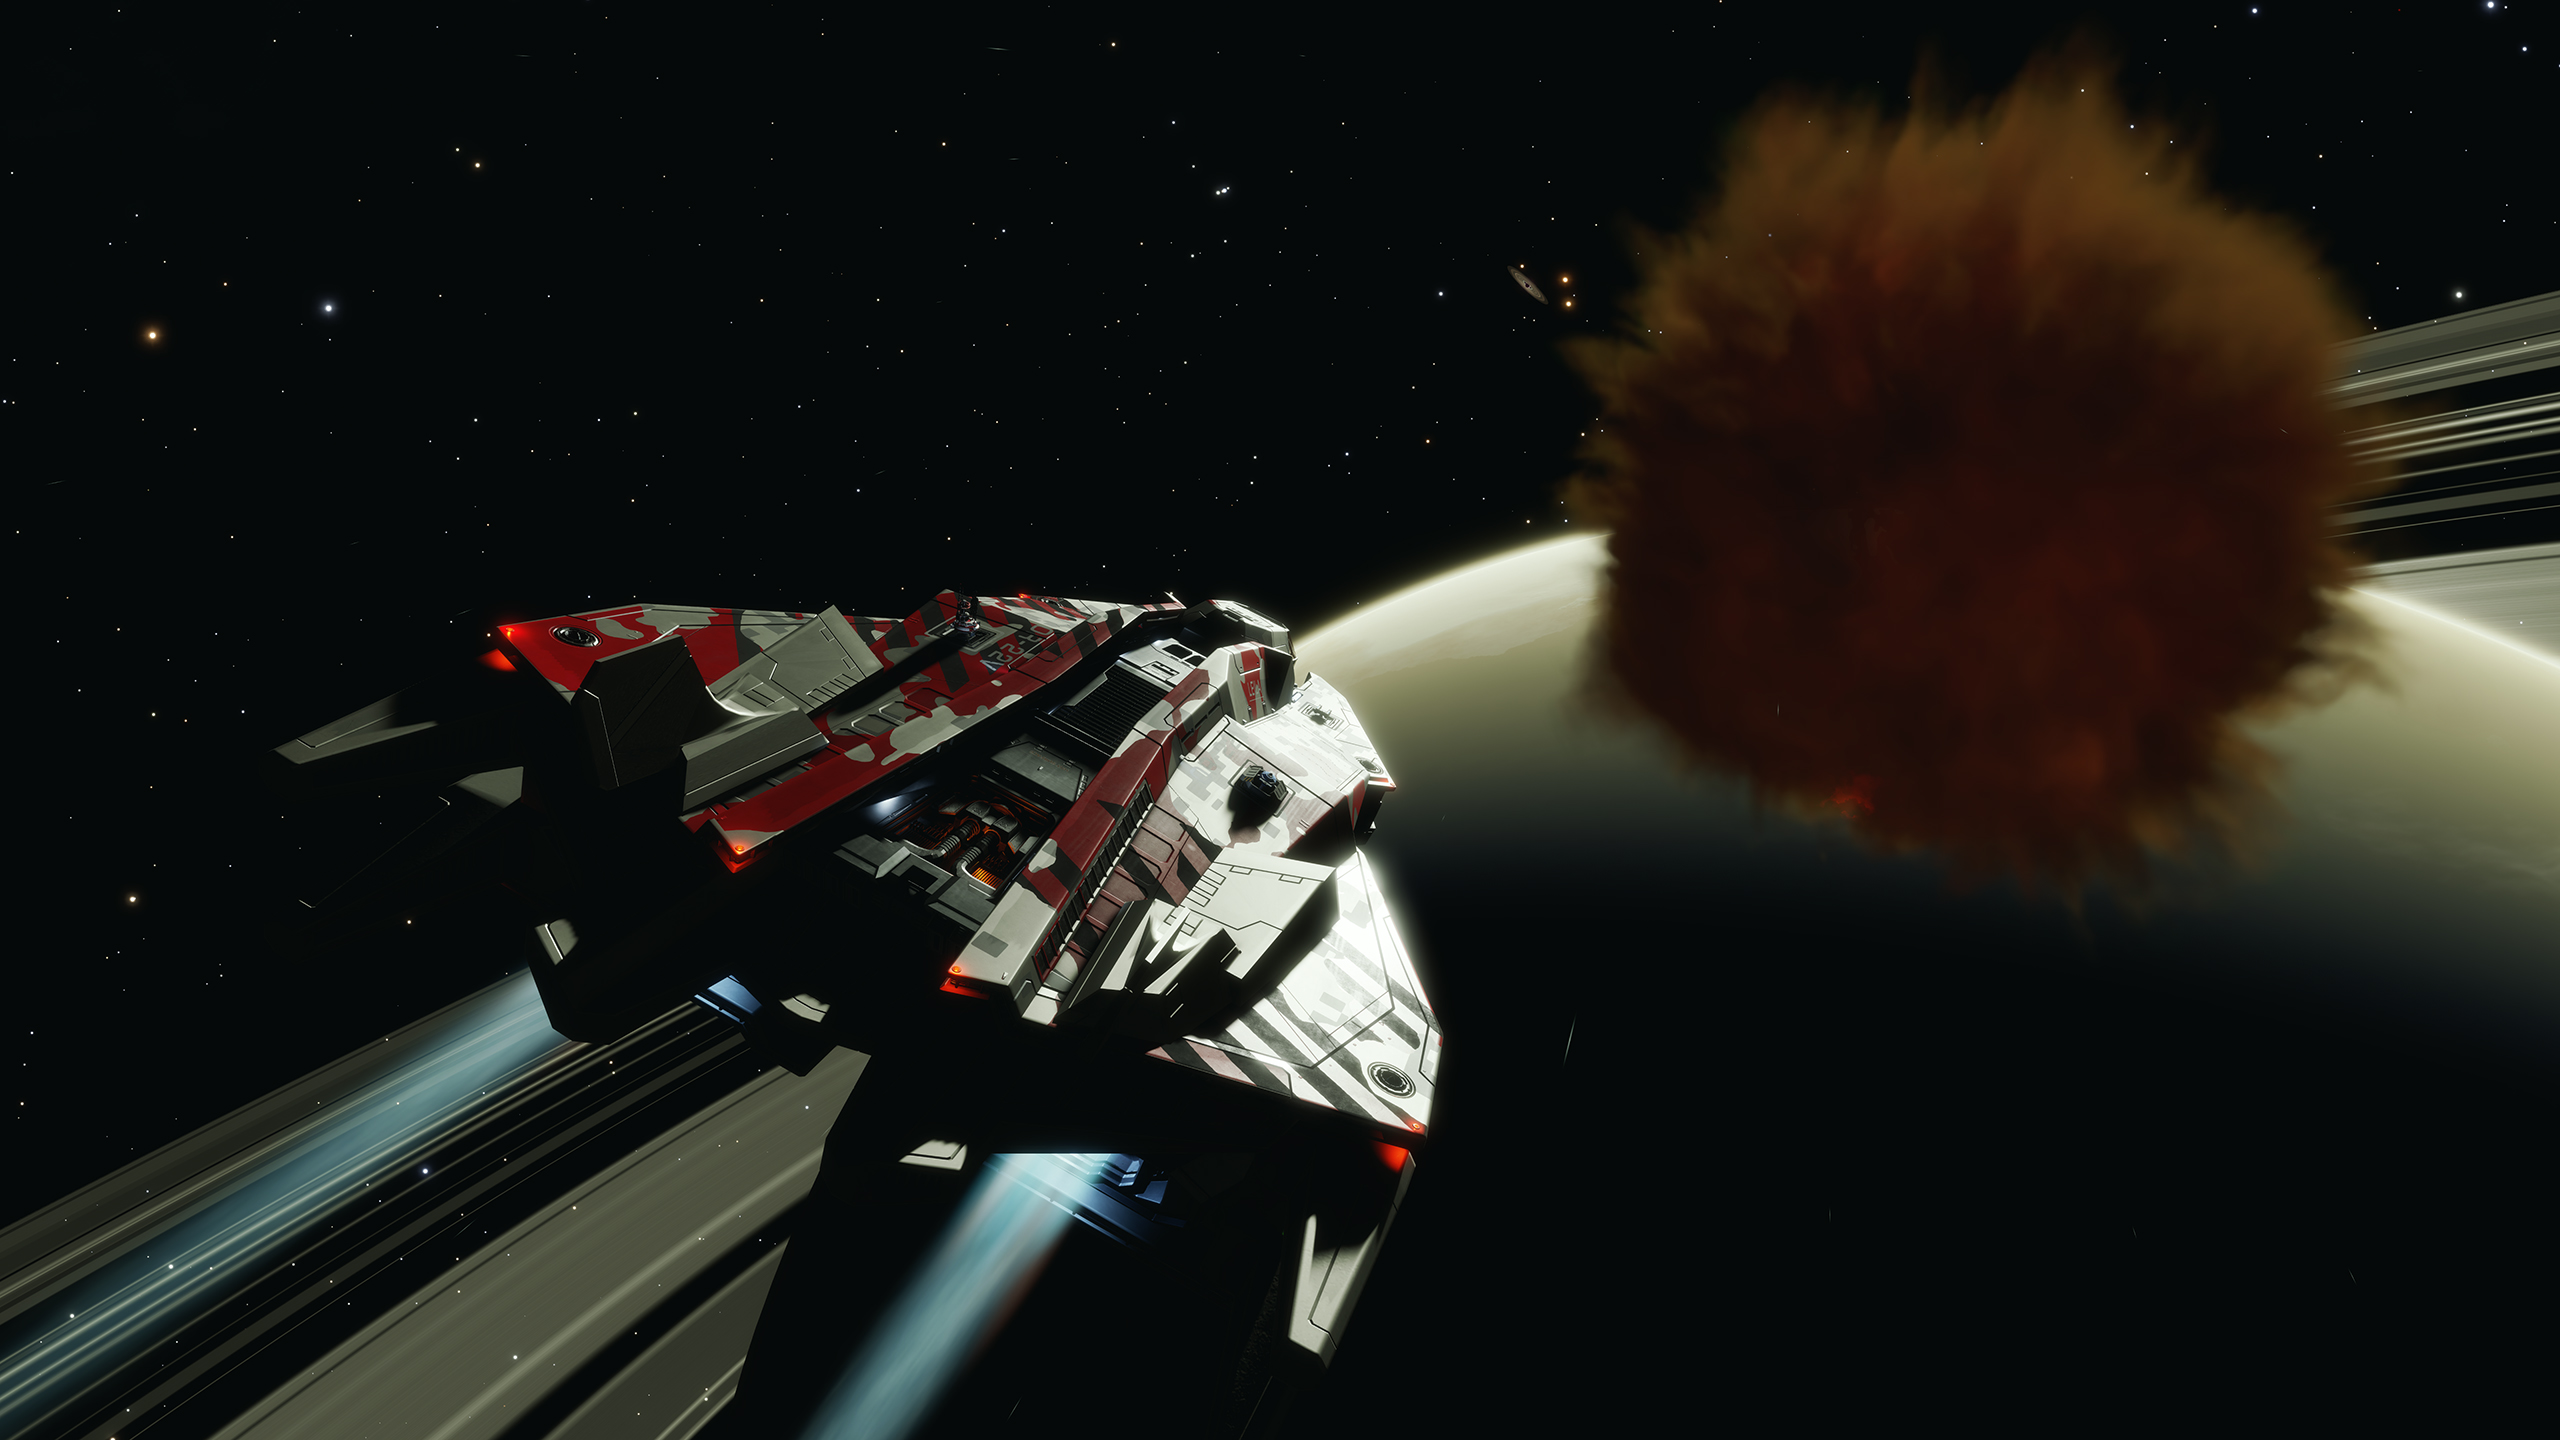 Spaceships fighting alien ships